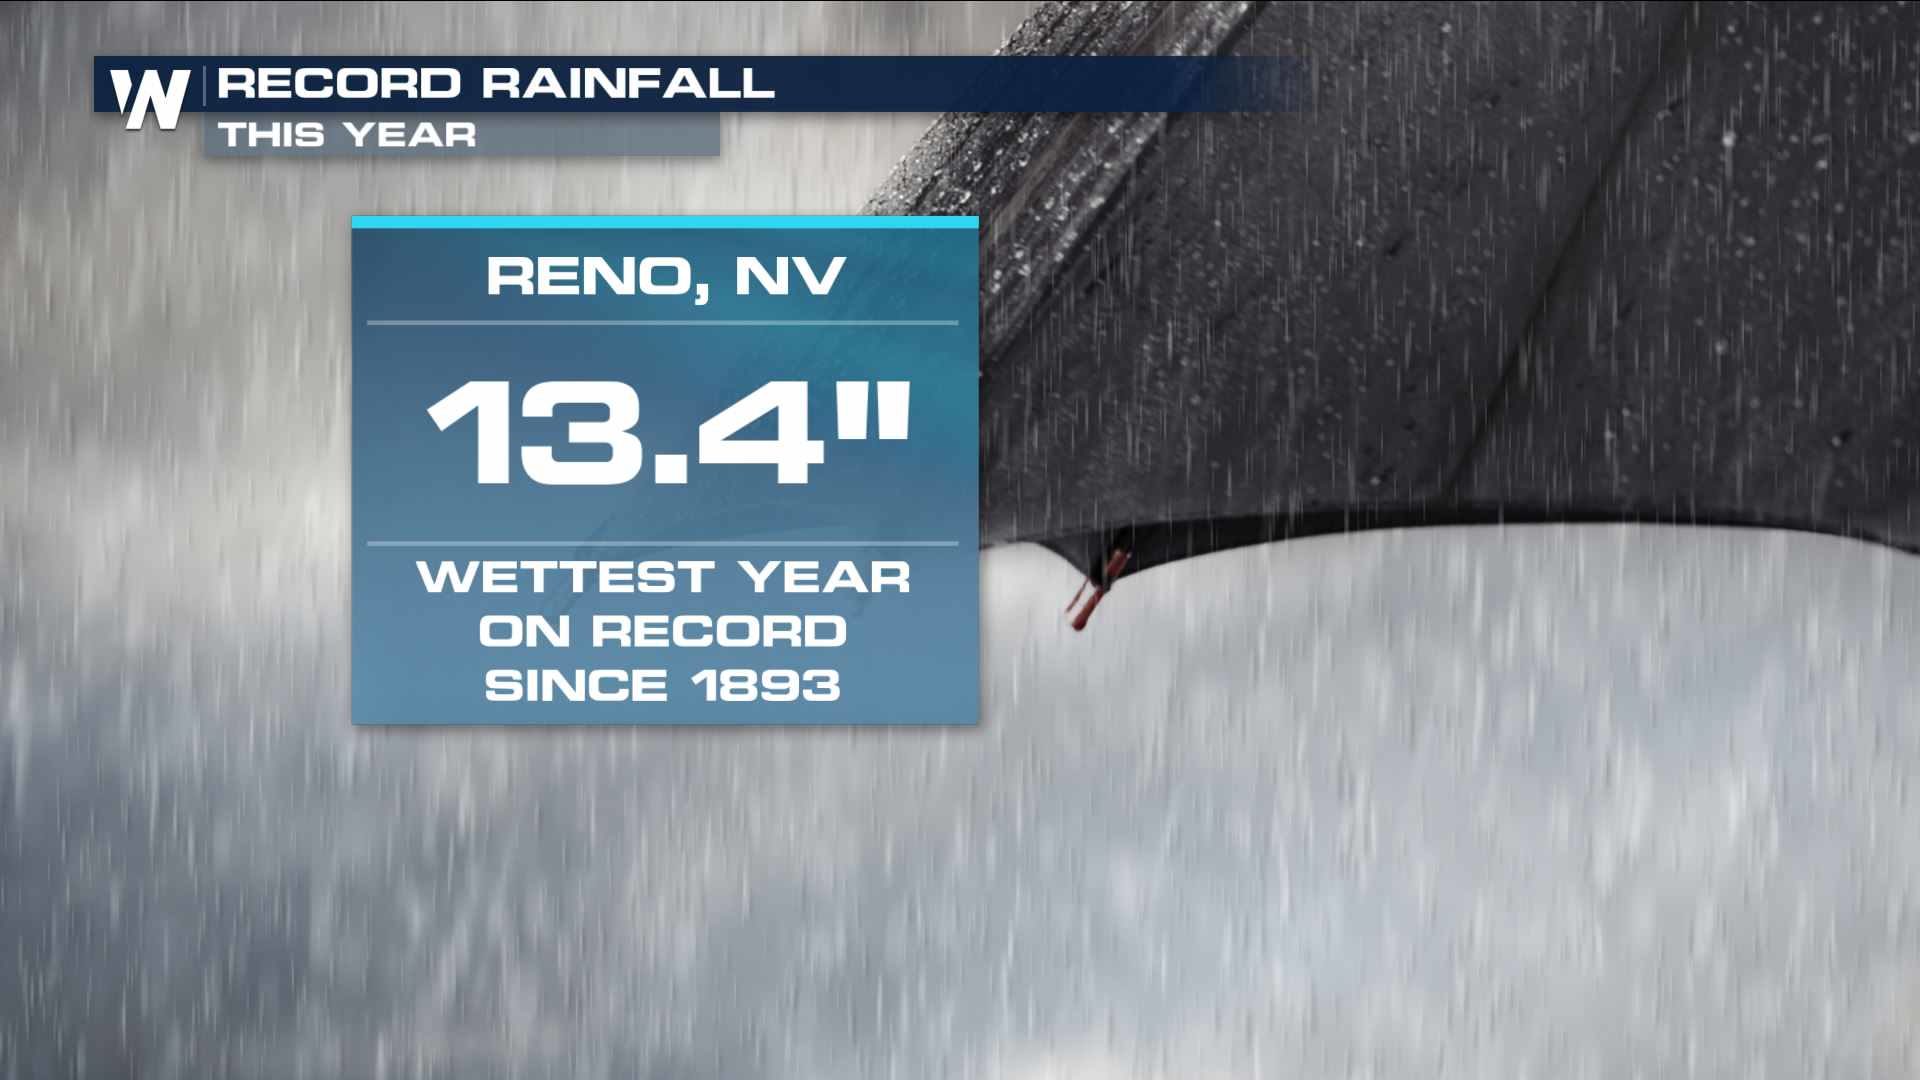 Record rainfall in Reno, Nevada